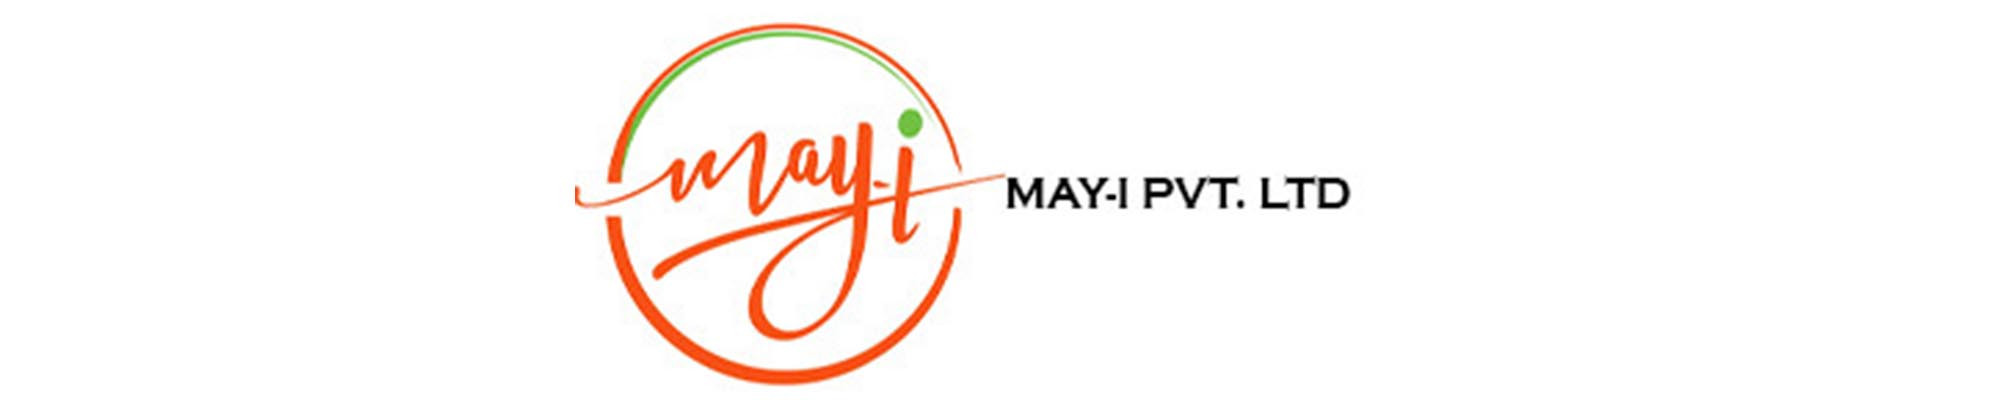 MAY-I Pvt. Ltd.